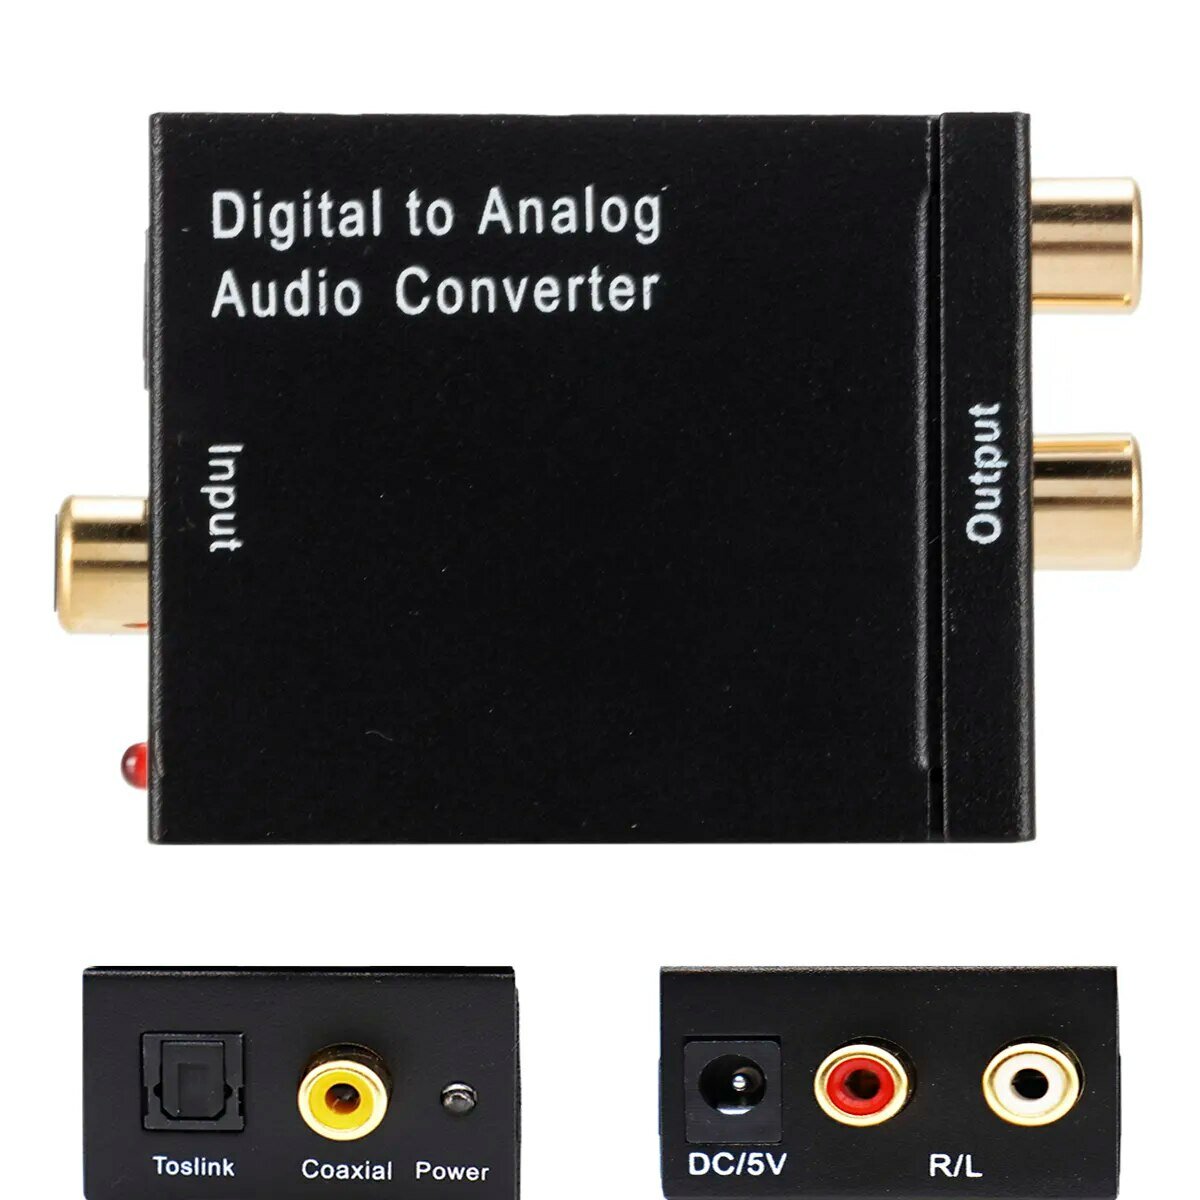 Аудиоконвертер адаптер AV Converter Toslink С ( С цифрового coaxial / toslink в аналоговый AV аудио сигнал )